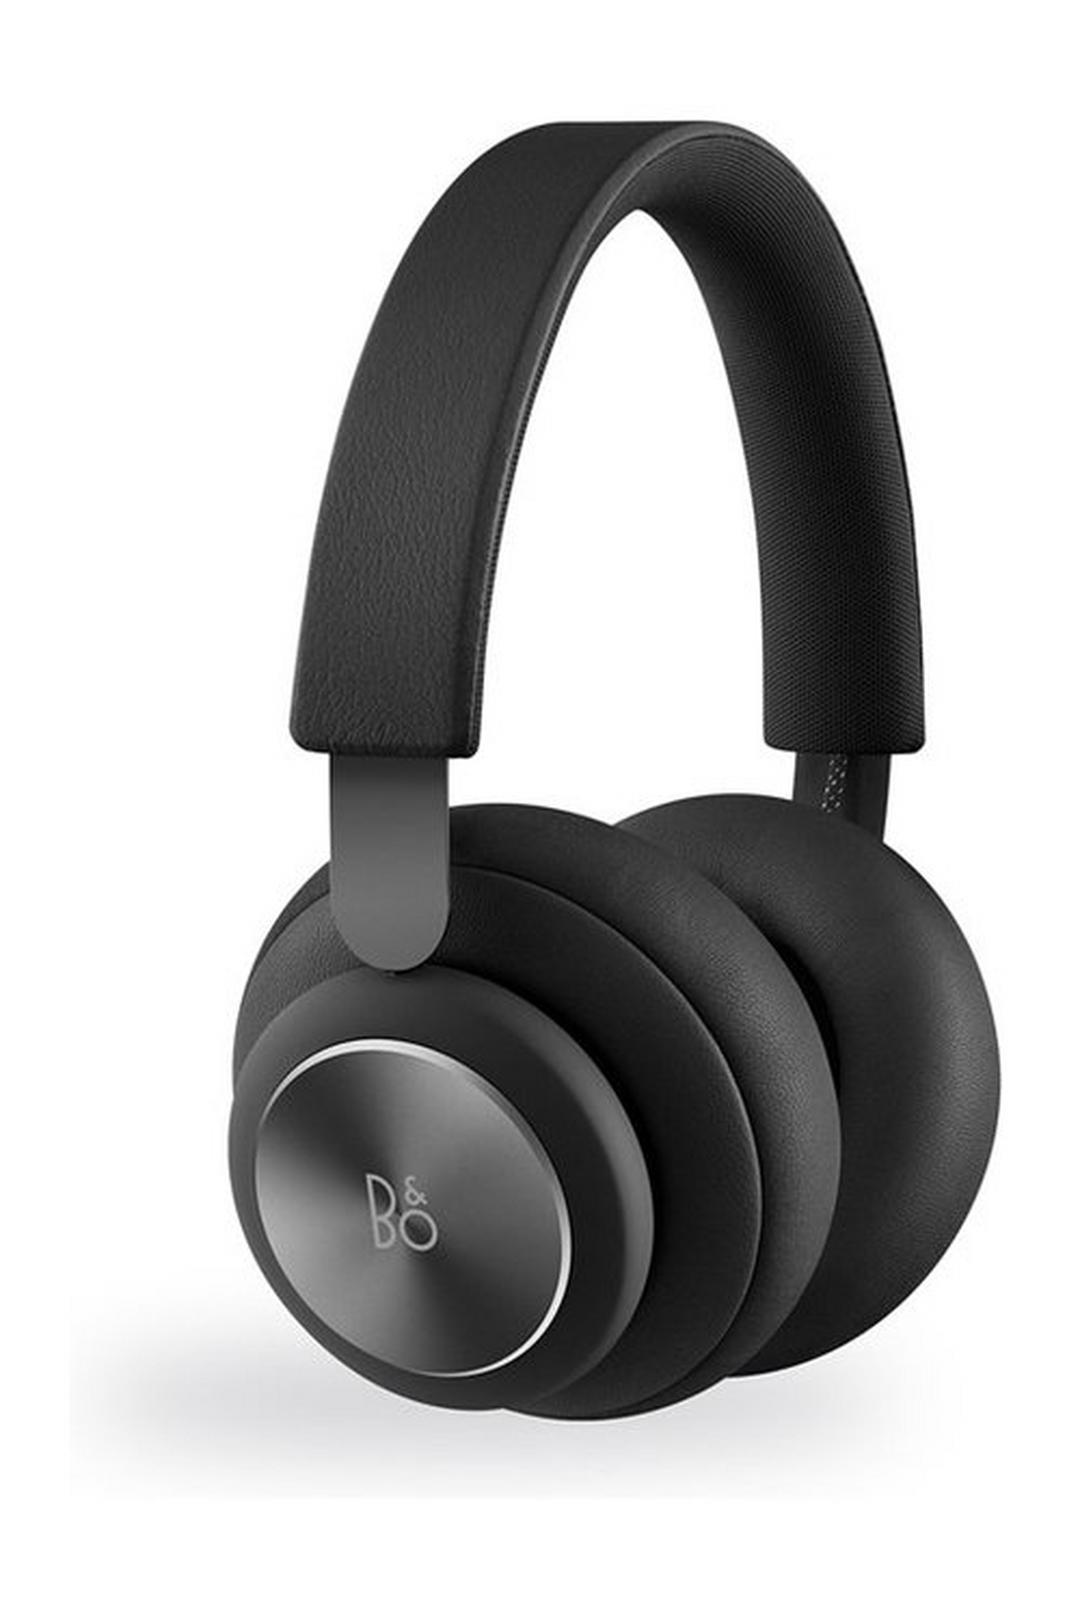 Bang & Olufsen Beoplay H4 2nd Generation Wireless Headphones - Black